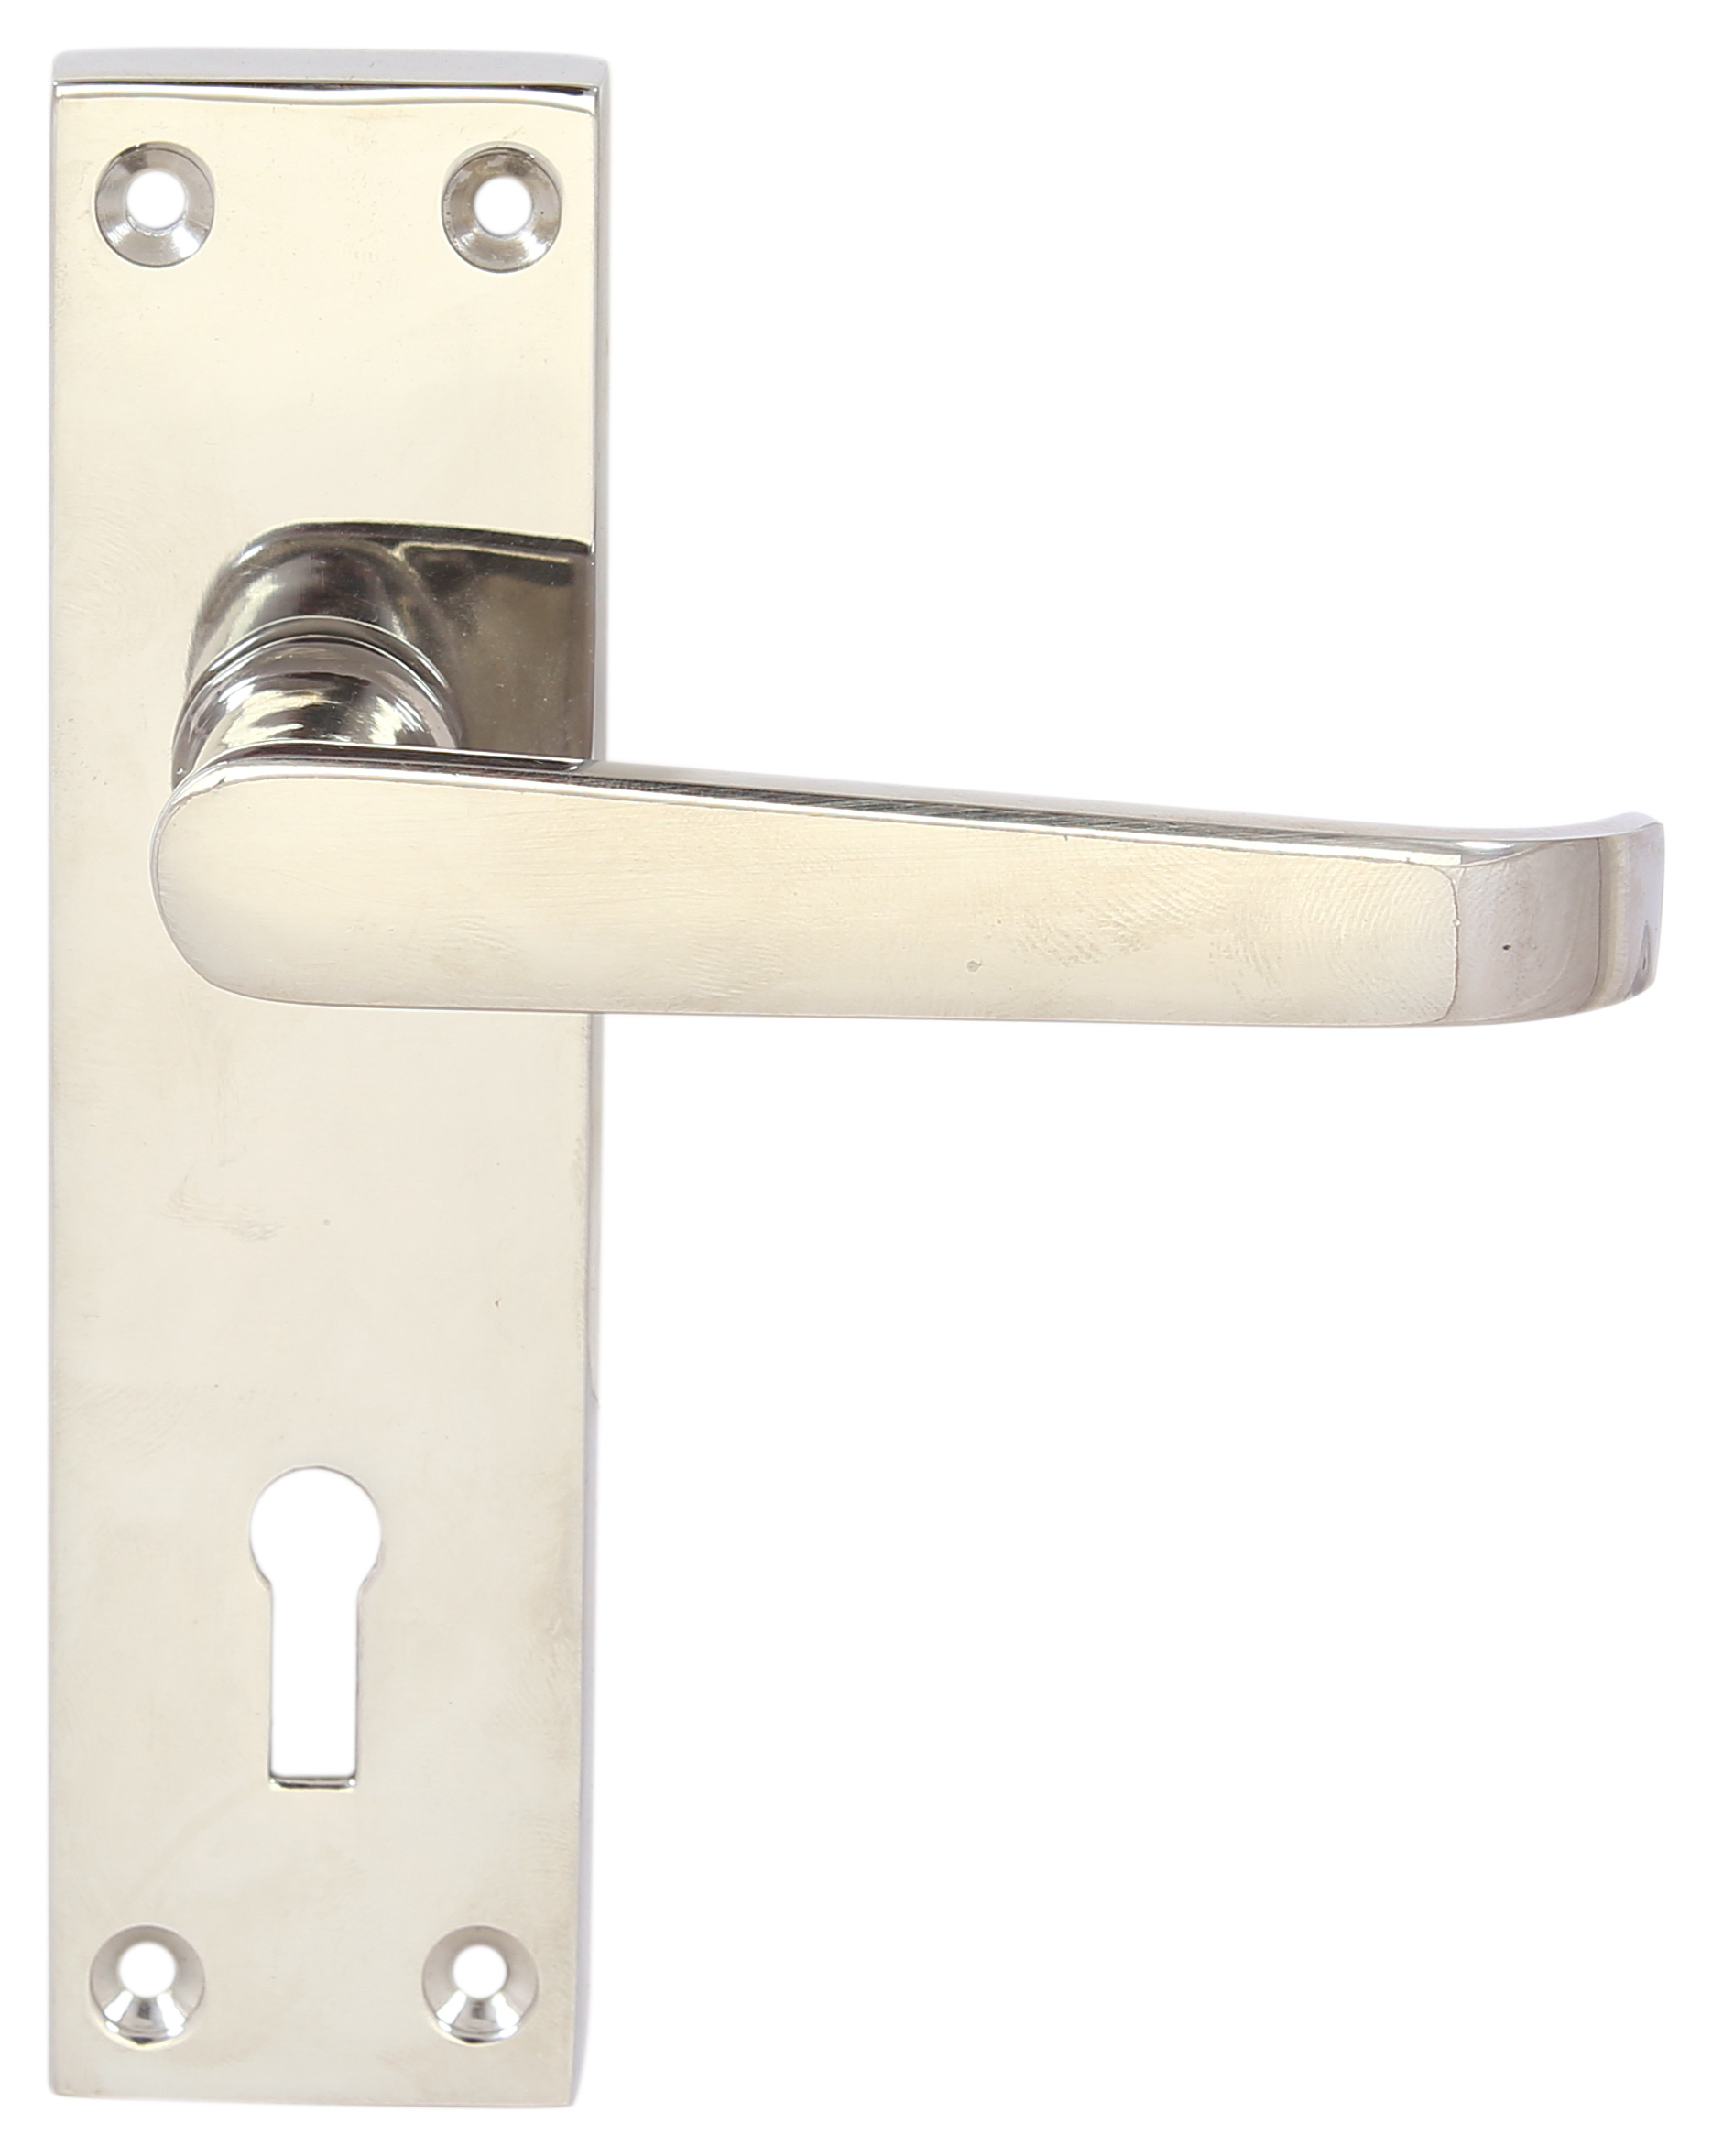 Victorian Straight Chrome Lock Door Handle - 1 Pair